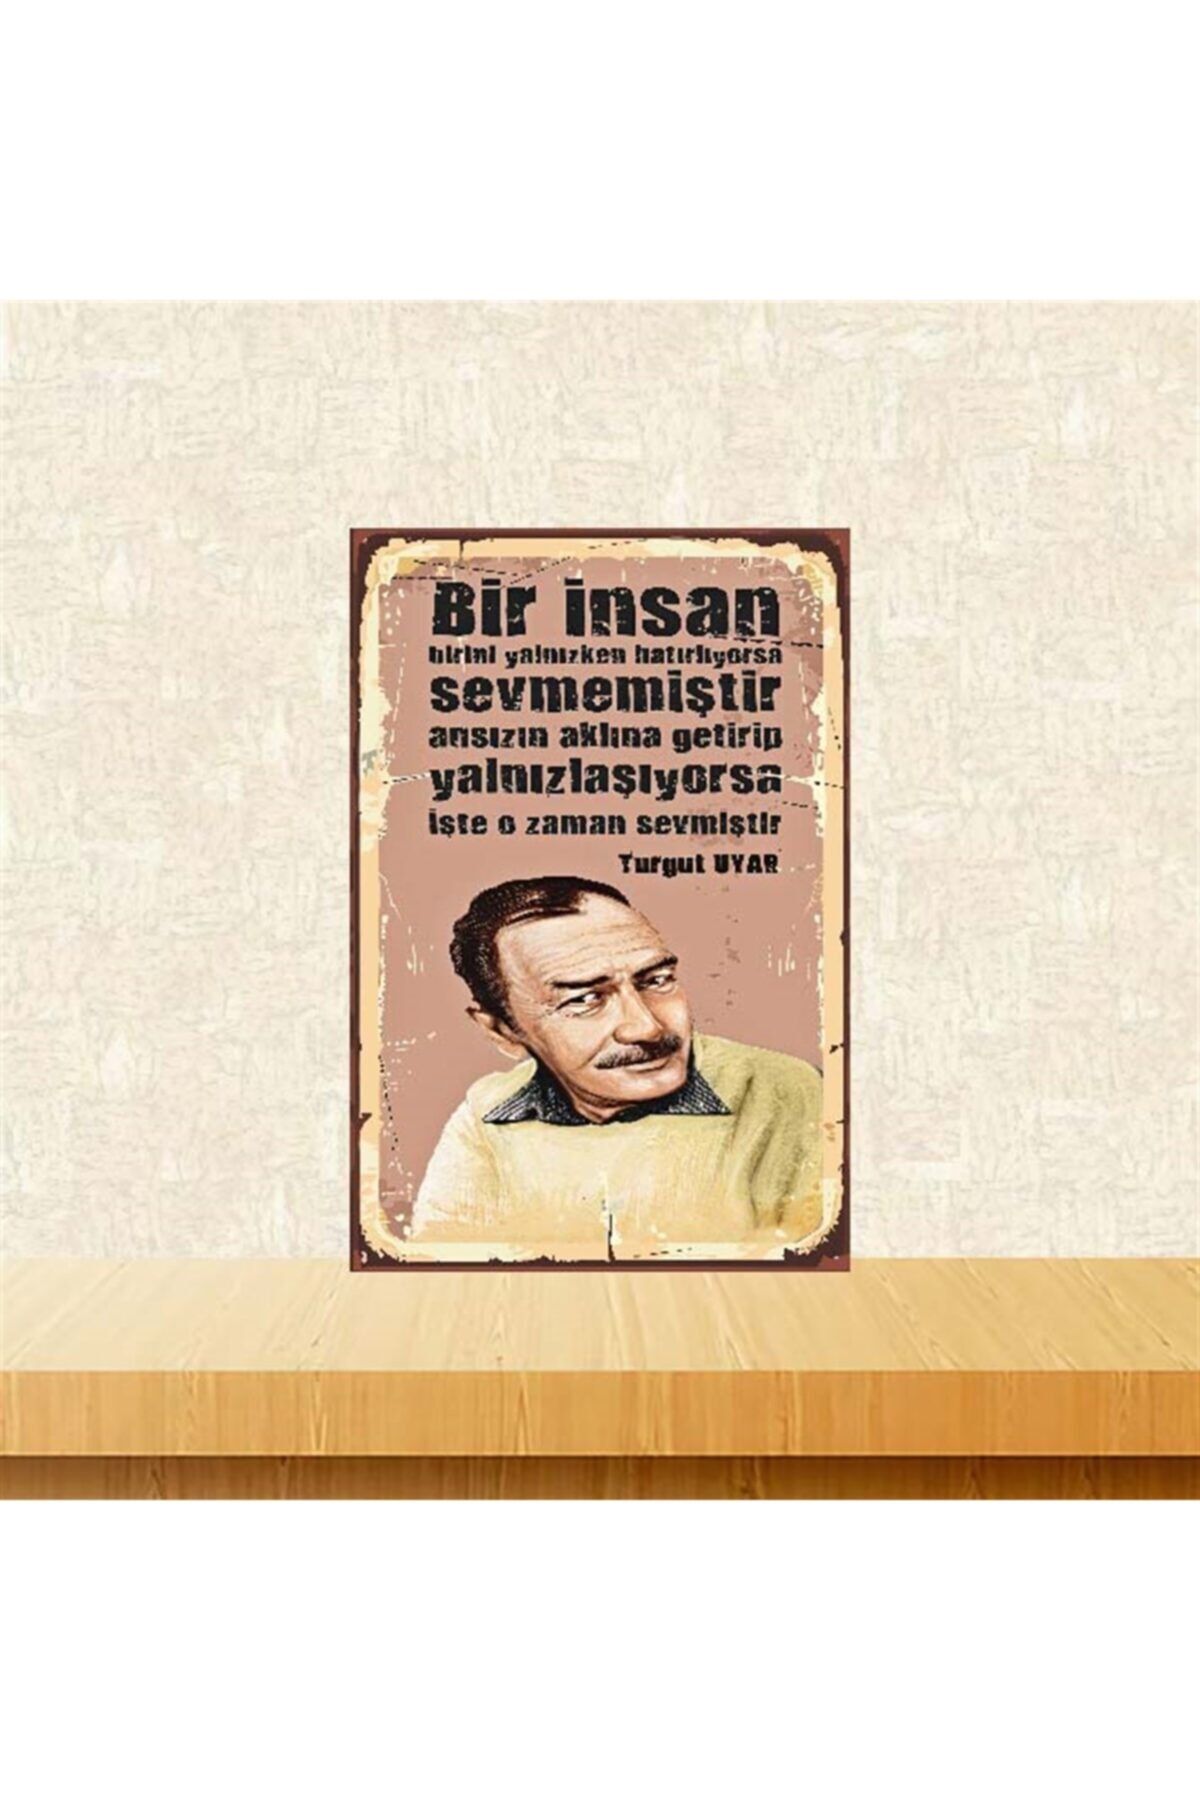 TAKIFİX O Zaman Sevmiştir Turgut Uyar 20-30 Cm Retro Ahşap Poster